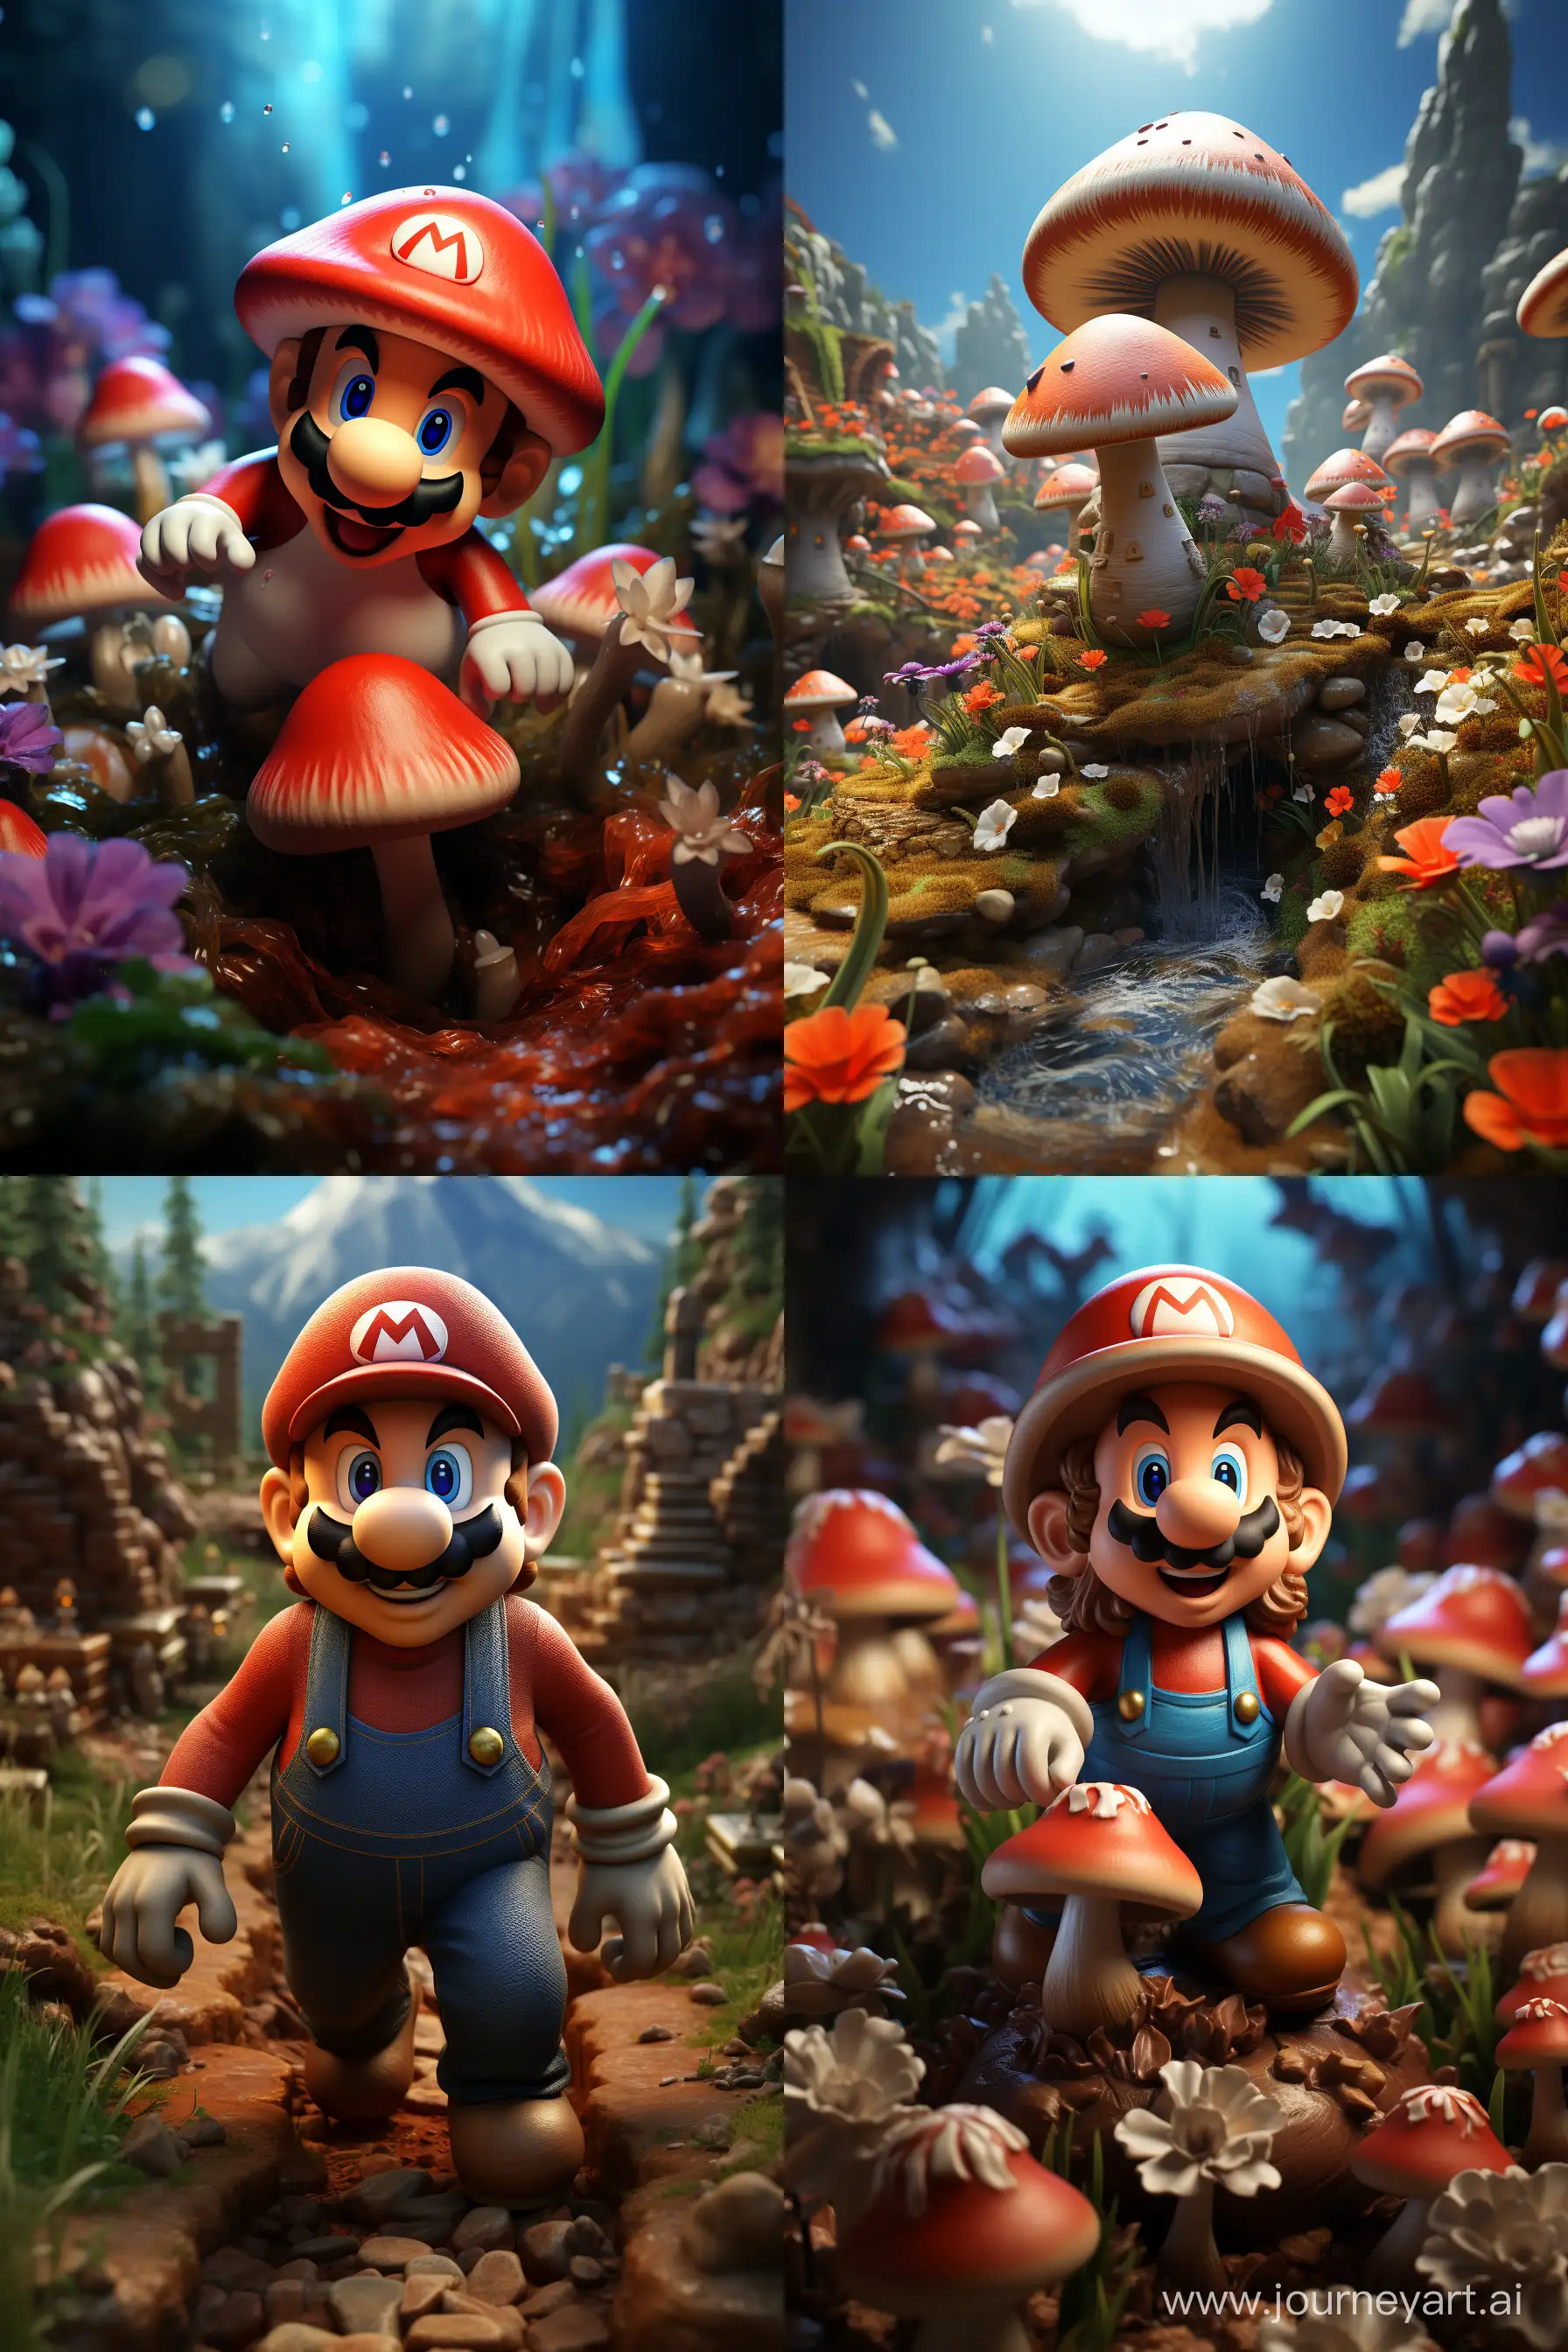 Super-Mario-3D-Adventure-in-Mushroom-Kingdom-Closeup-32K-Gaming-Image